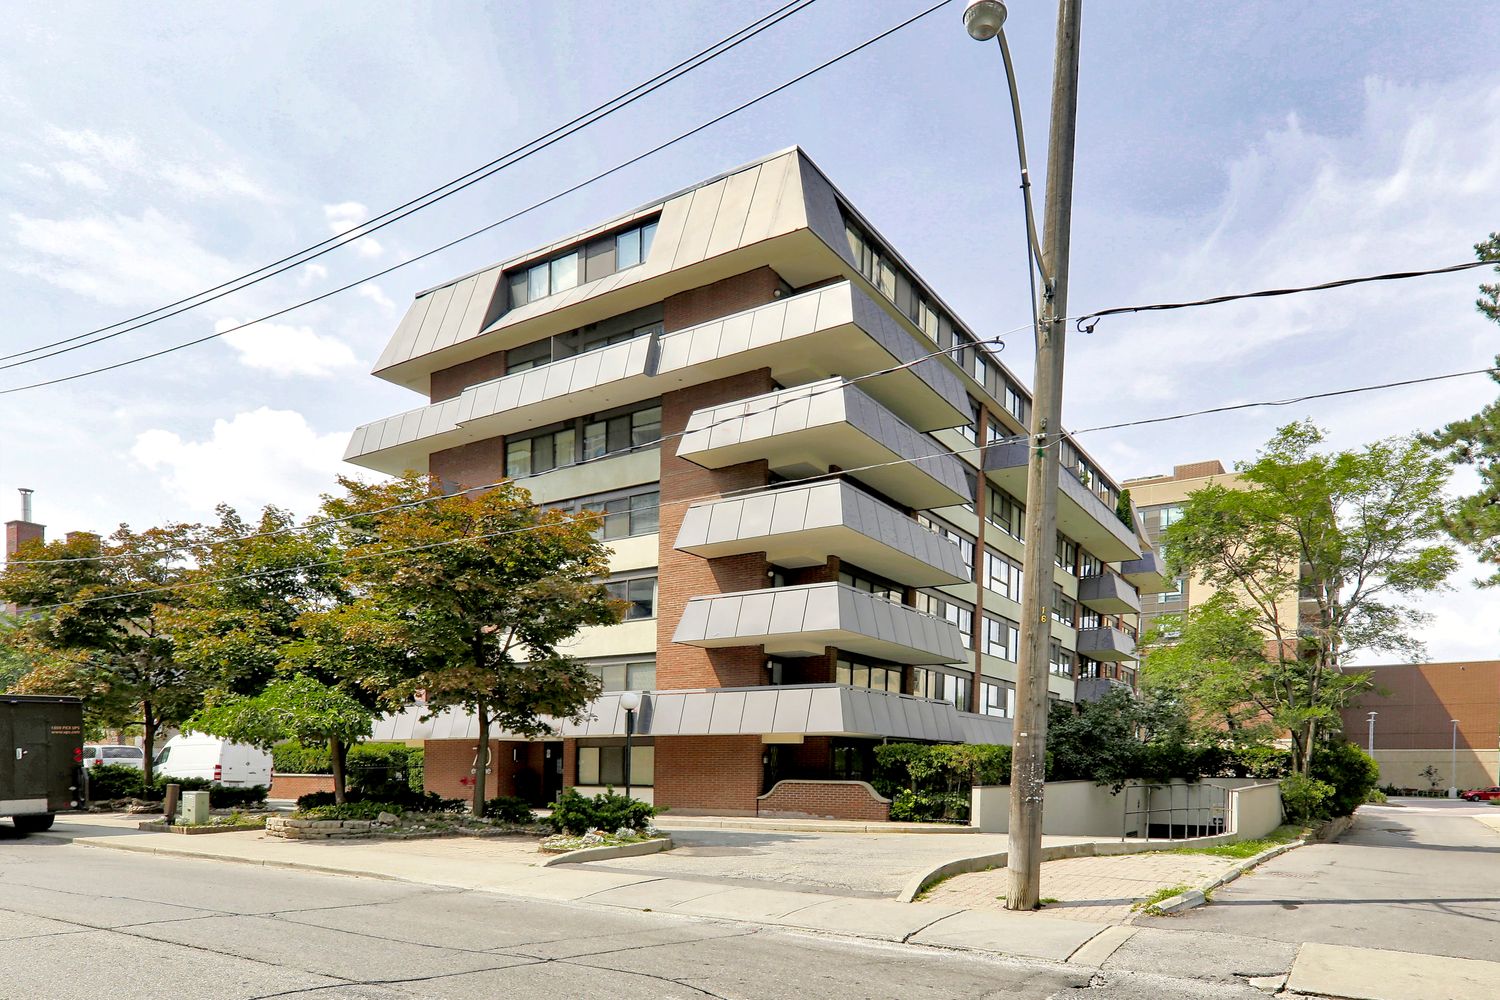 70 Erskine Avenue. 70 Erskine Avenue Condos is located in  Midtown, Toronto - image #2 of 4